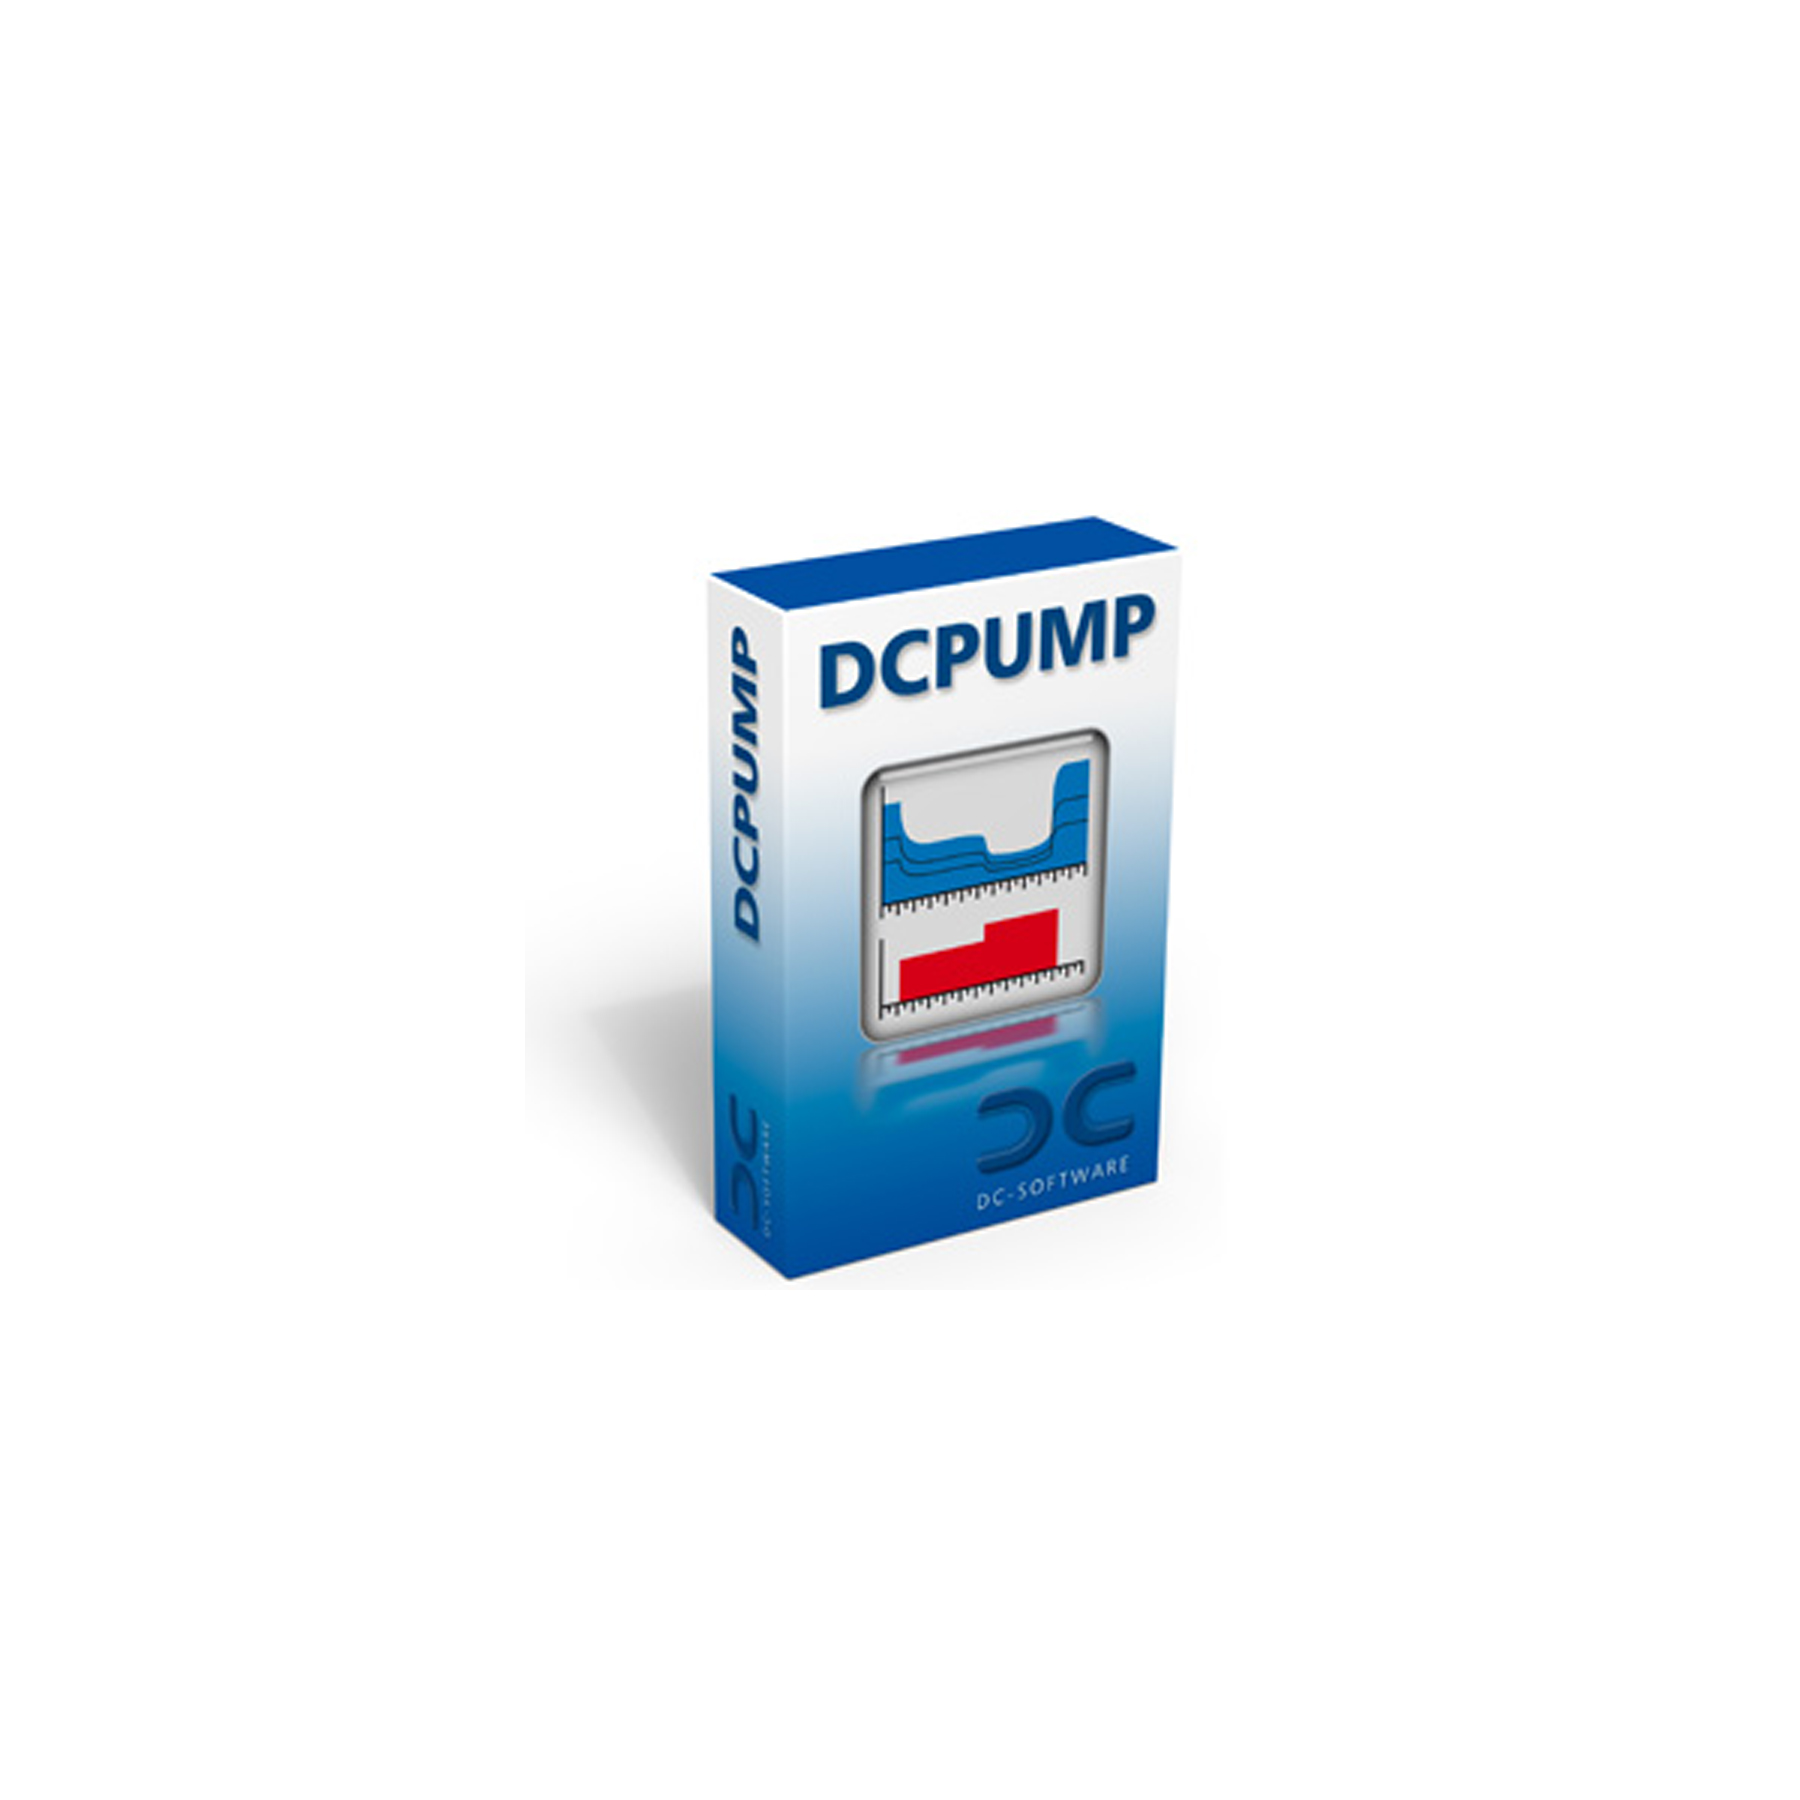 19-Software-za-mehaniku-tla-DCPUMP